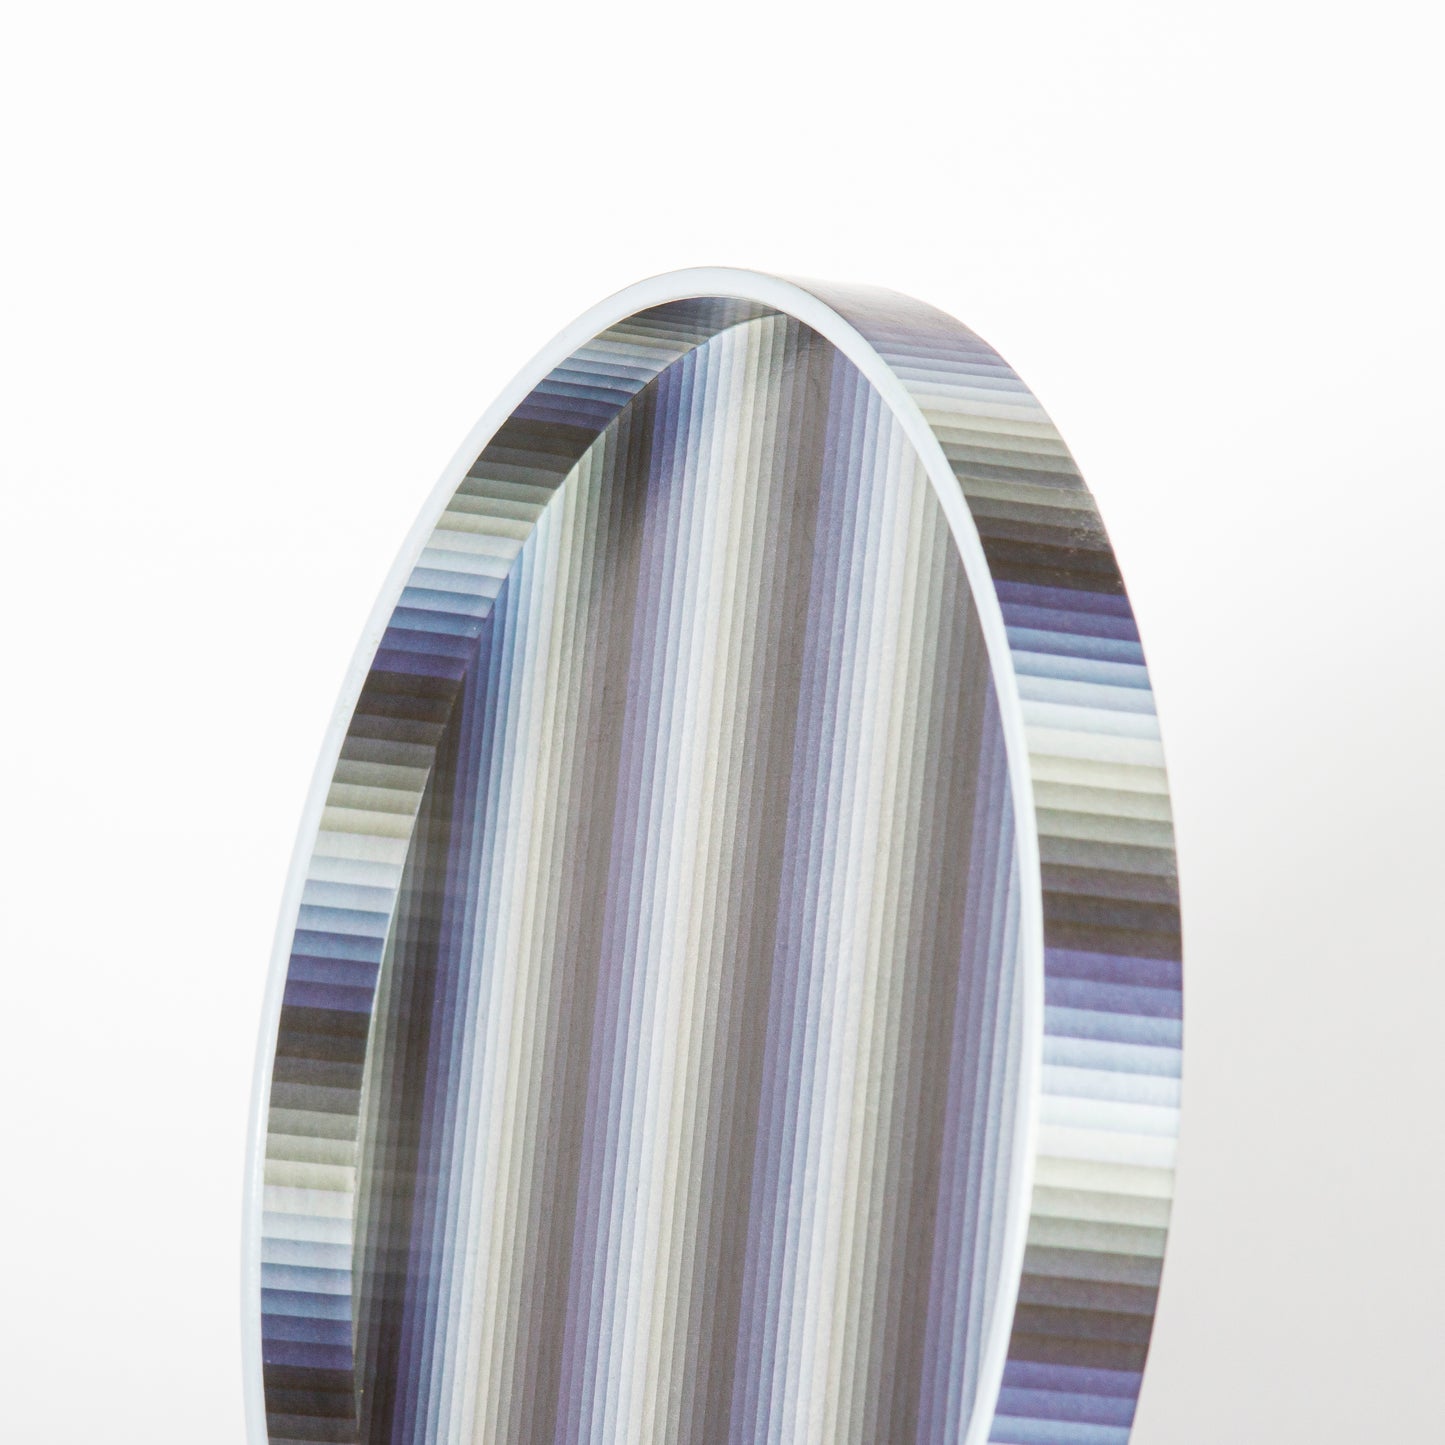 Medium Undulating Stripe Tray - Blue